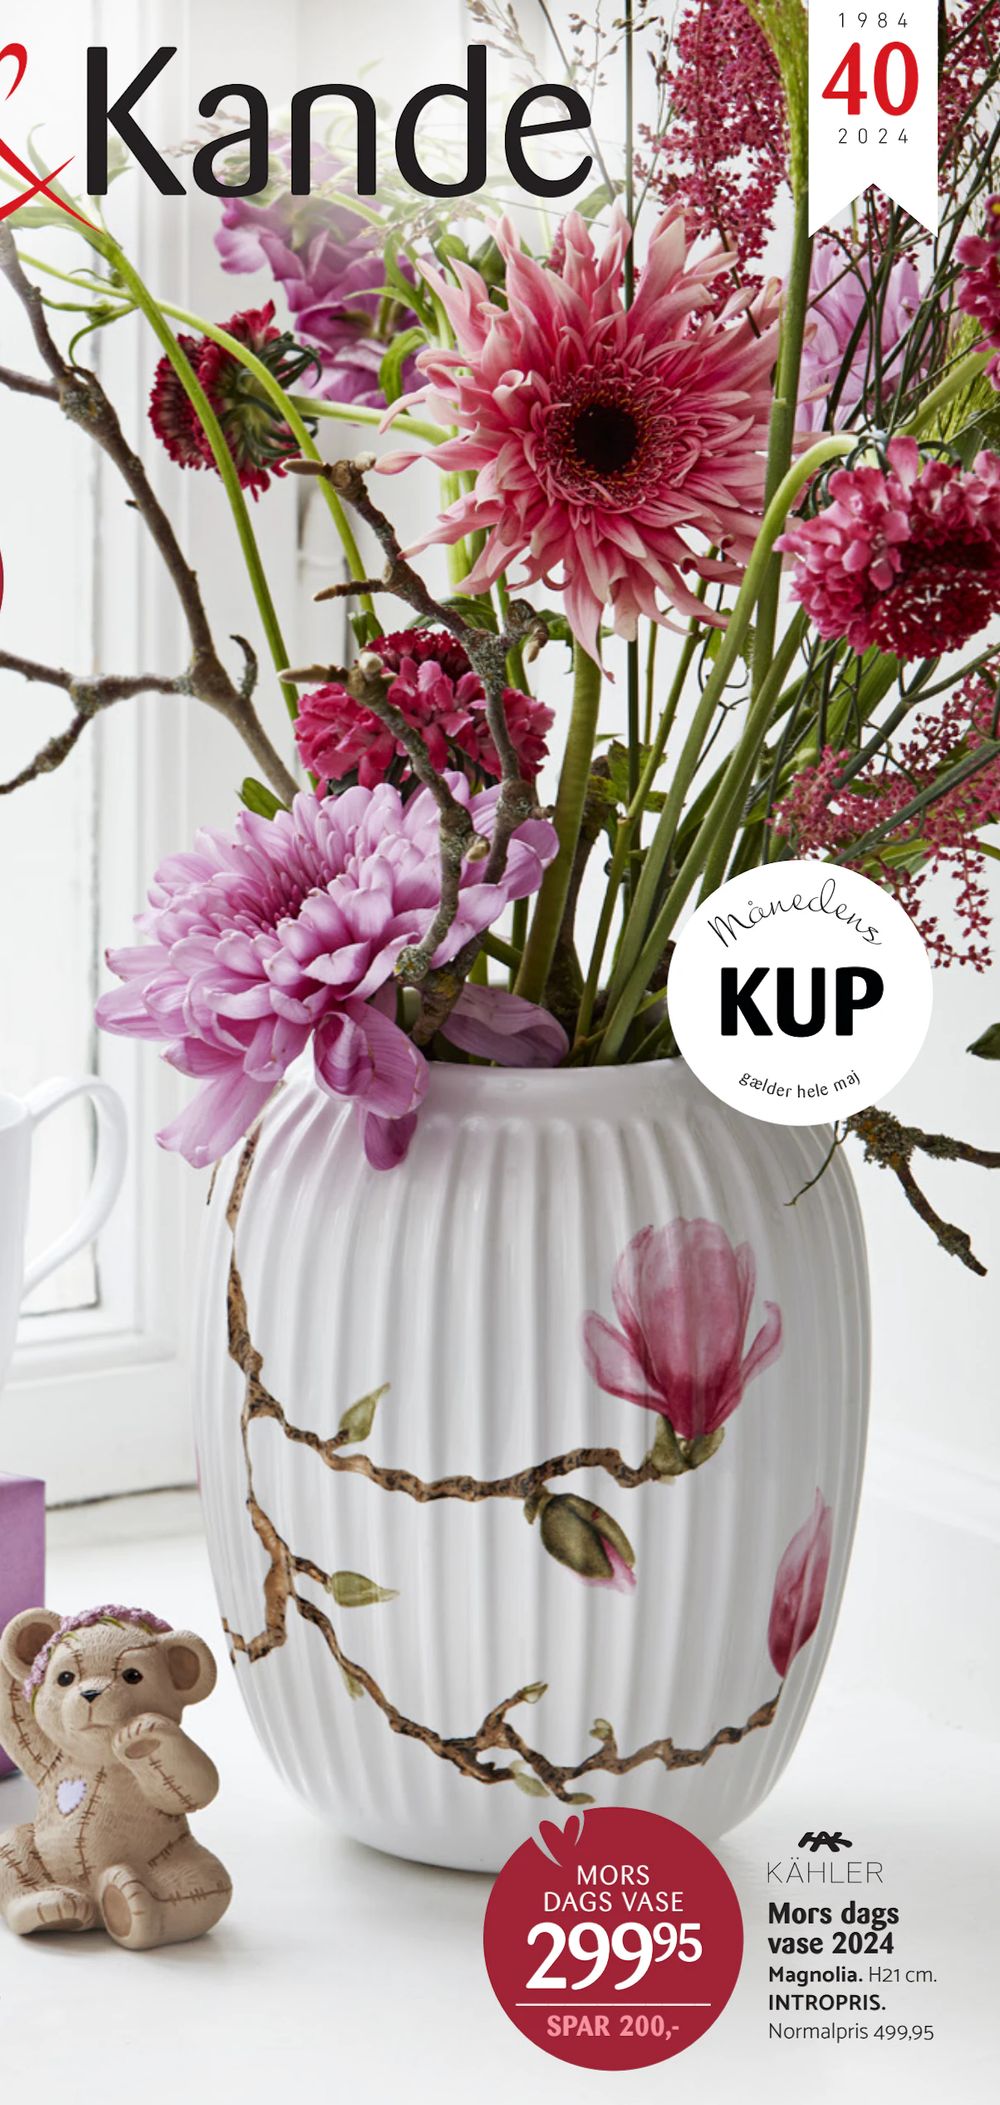 Tilbud på Mors dags vase 2024 fra Kop & Kande til 299,95 kr.